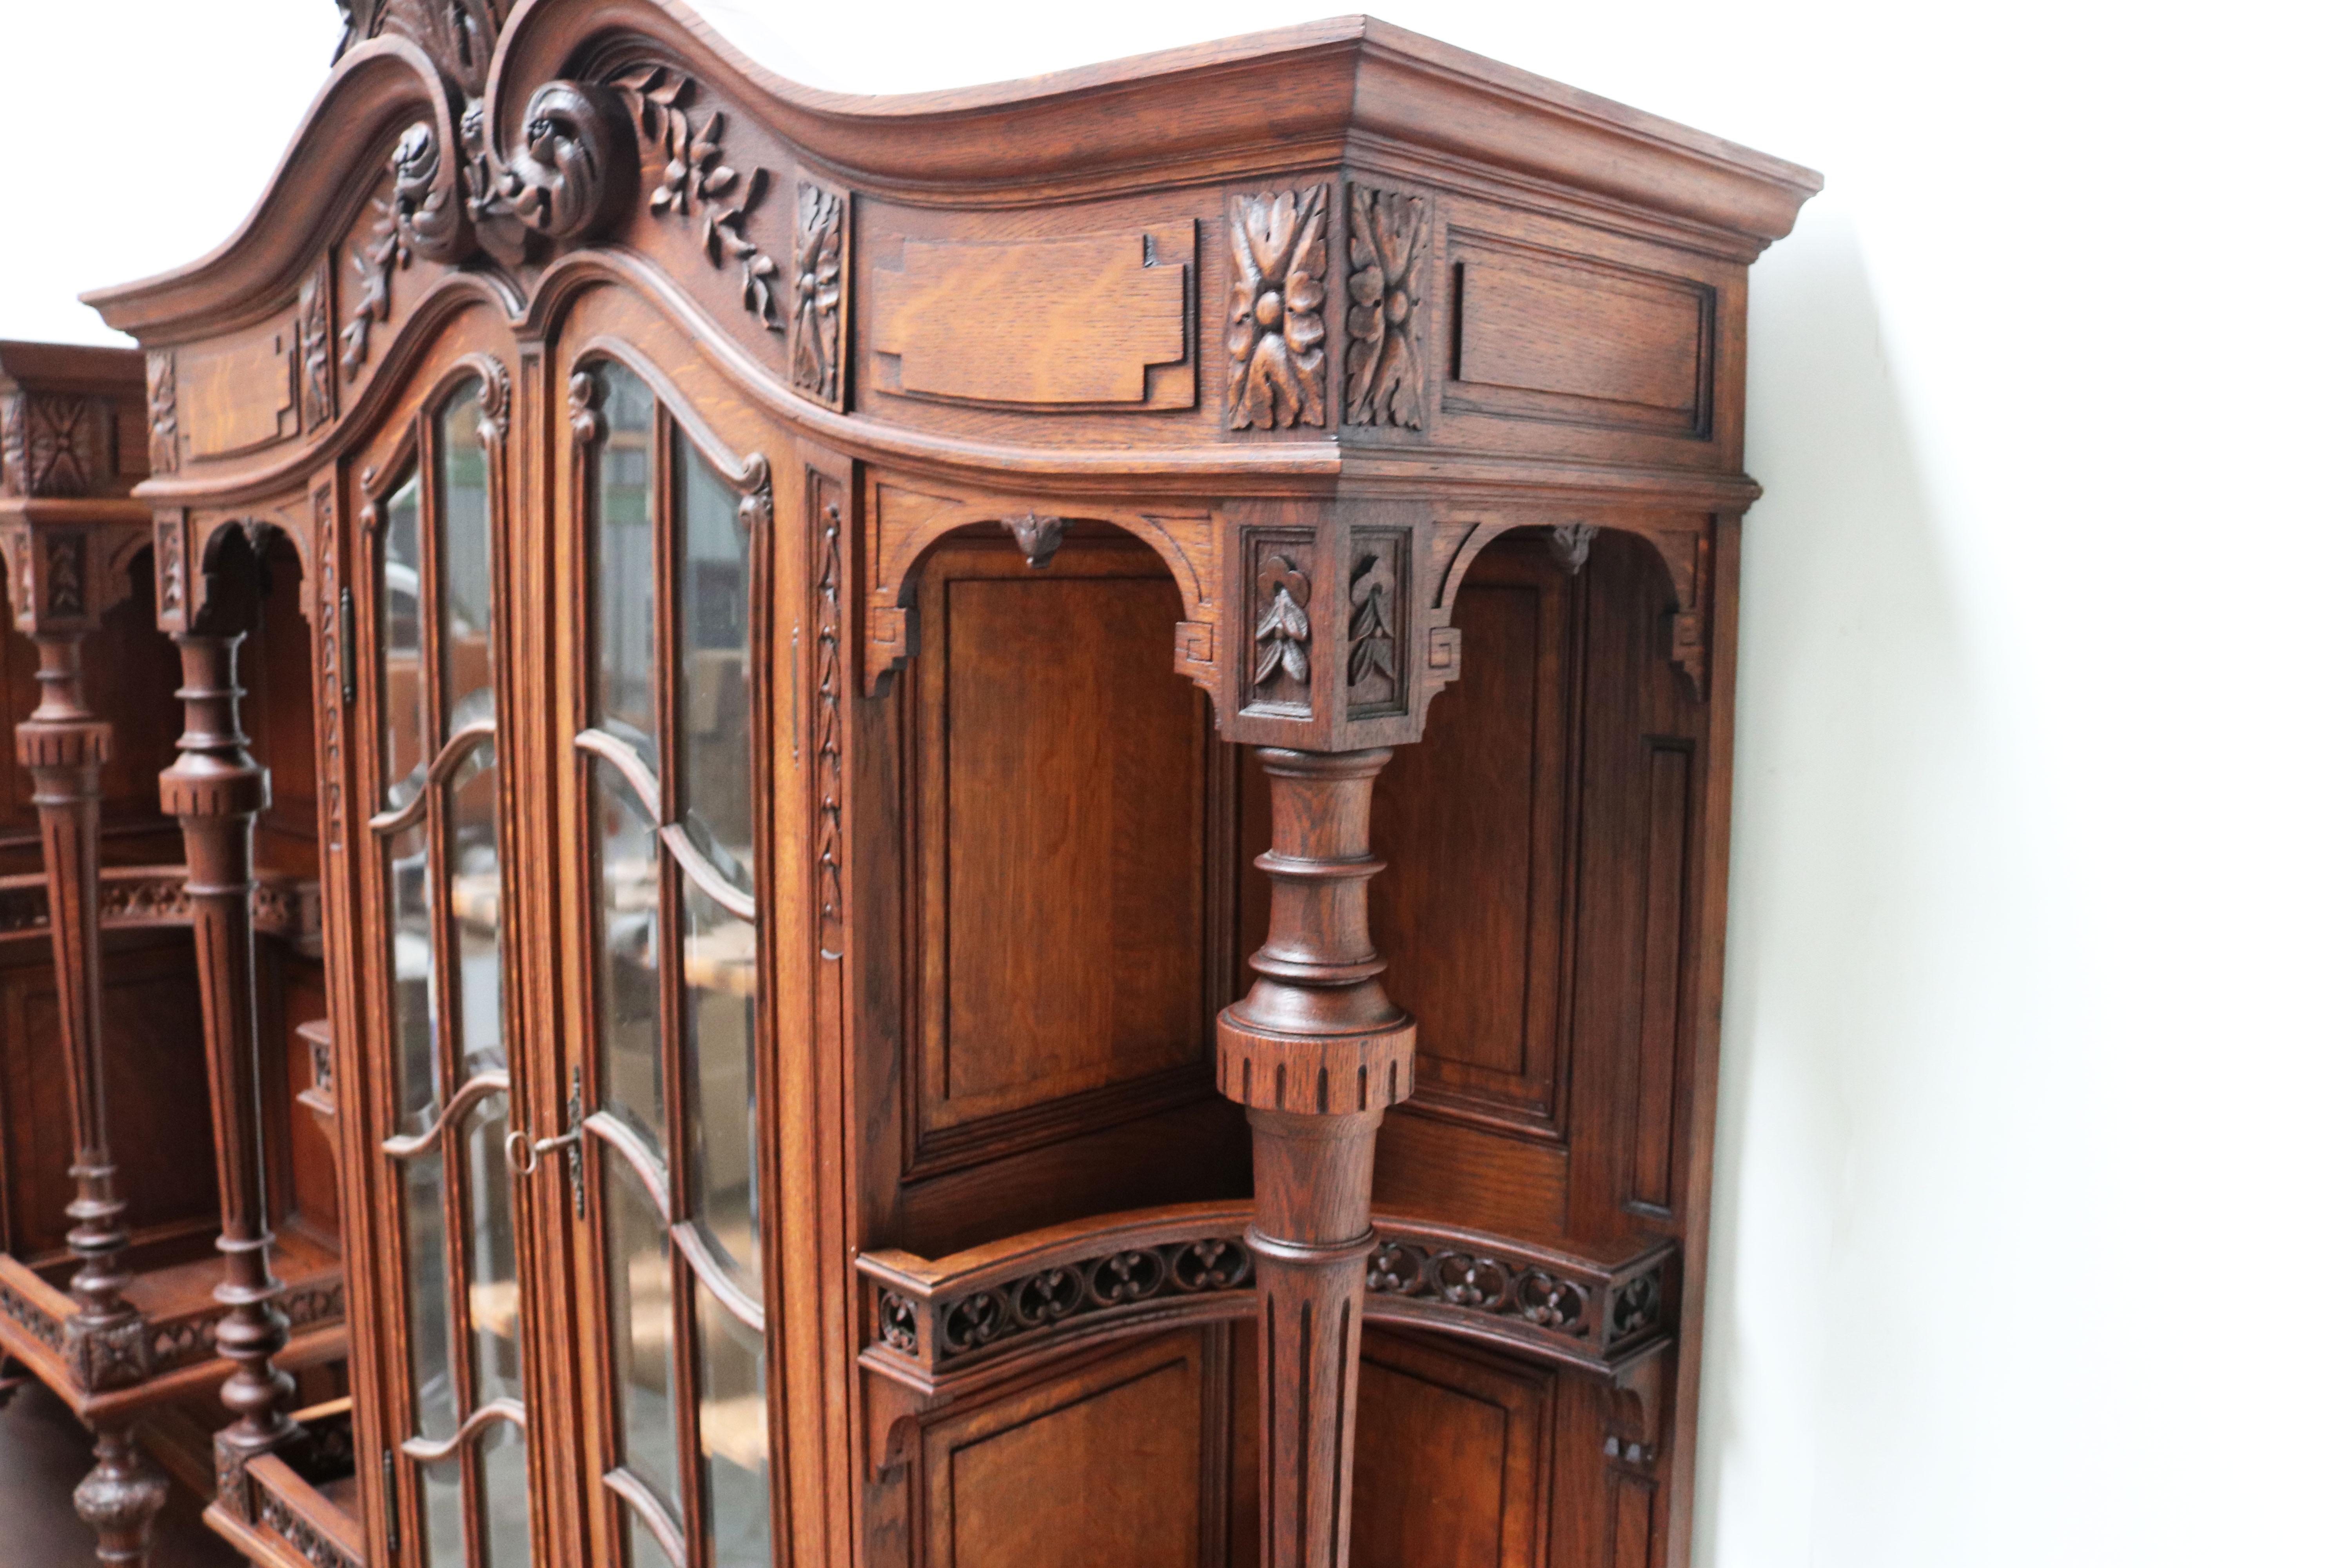 Pair of Large French Antique Renaissance Revival Buffet Cabinet Oak 19th Century In Good Condition For Sale In Ijzendijke, NL